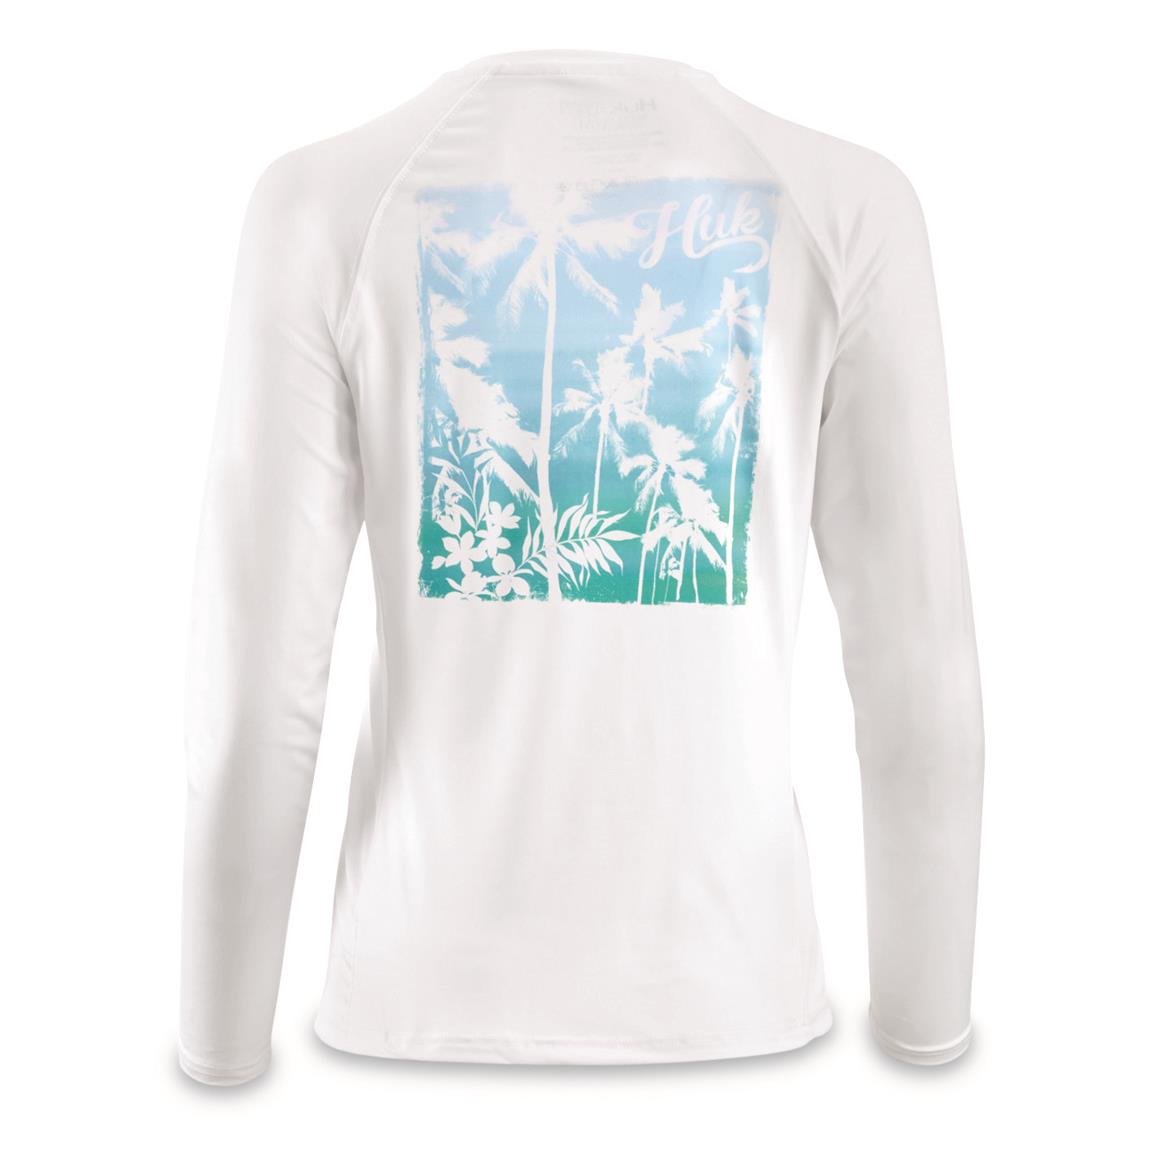 Huk Women's Paradise Pursuit Shirt, White